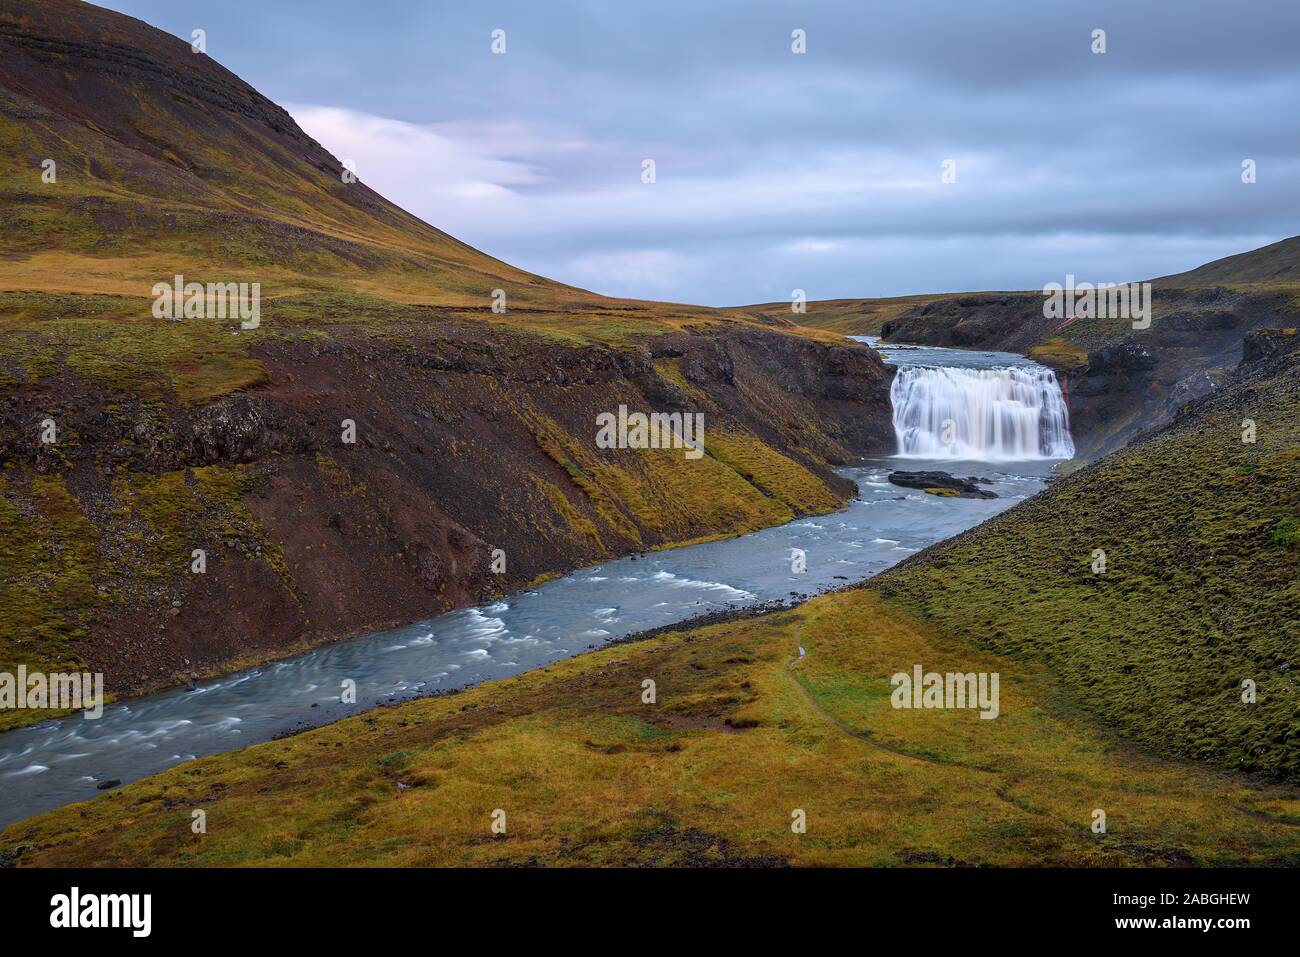 Thorufoss waterfall located on the Laxa i Kjos river near Reykjavik in Iceland Stock Photo